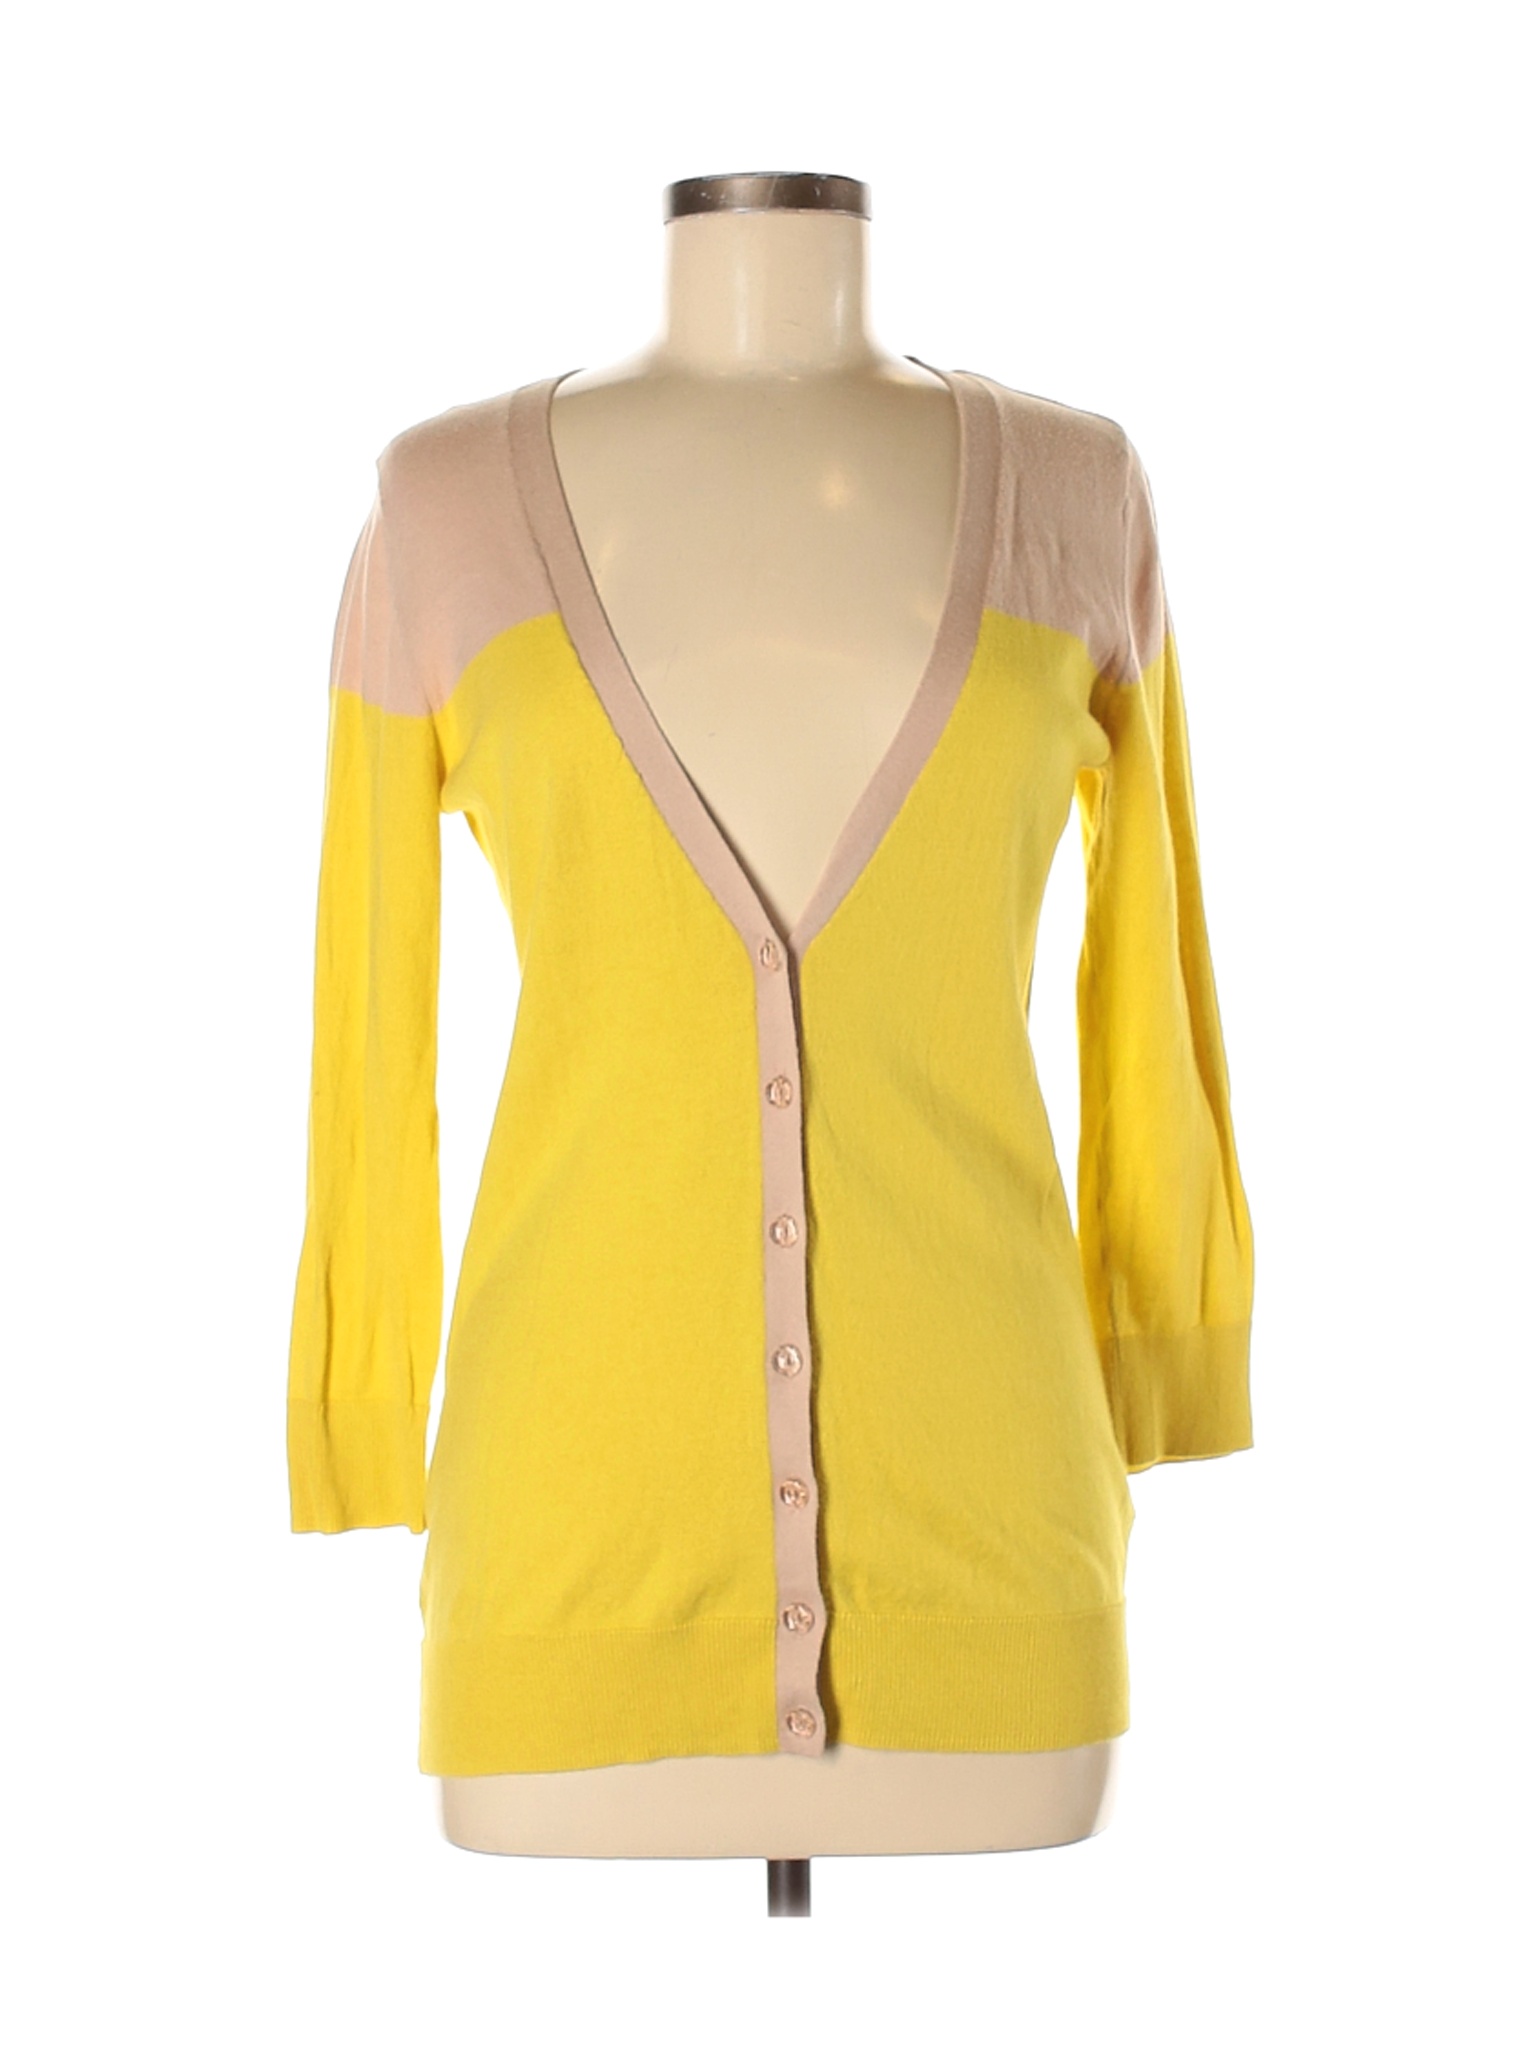 The Limited Women Yellow Cardigan M | eBay